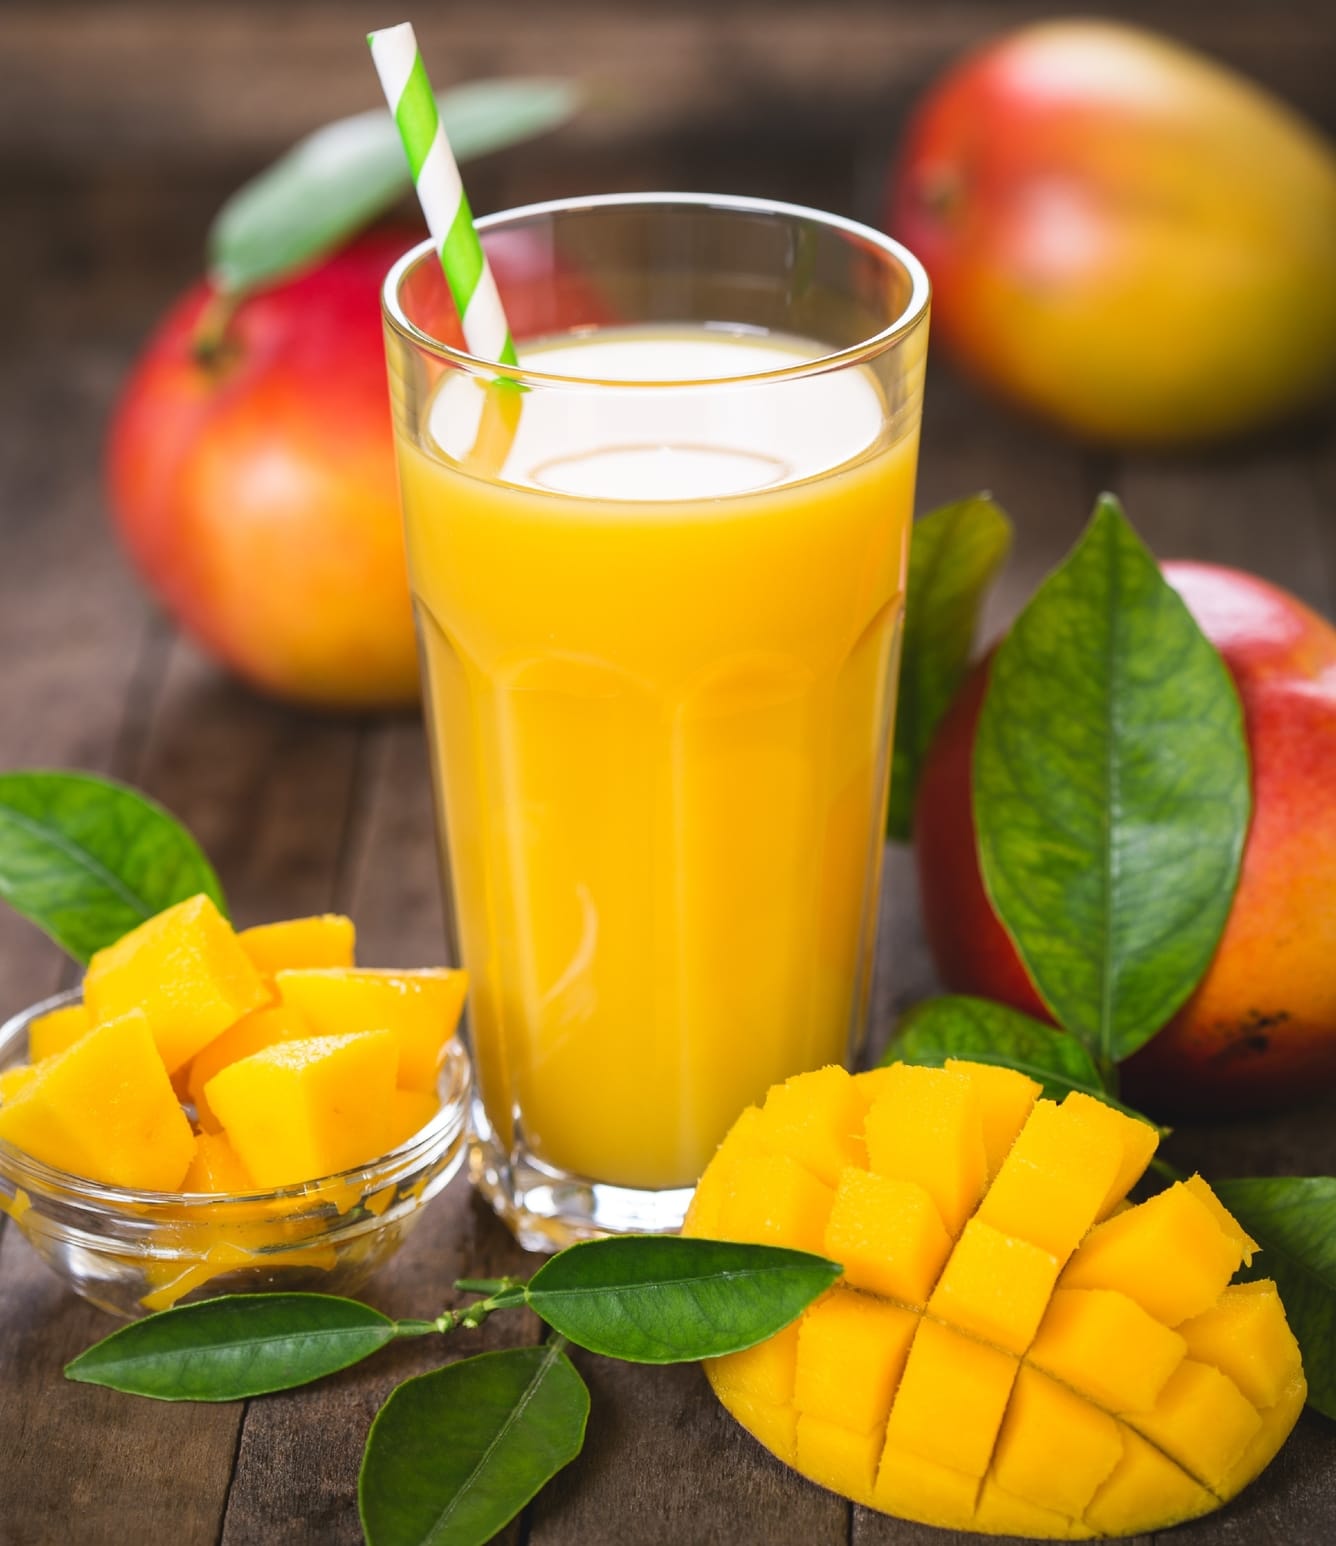 Apple and mango juice